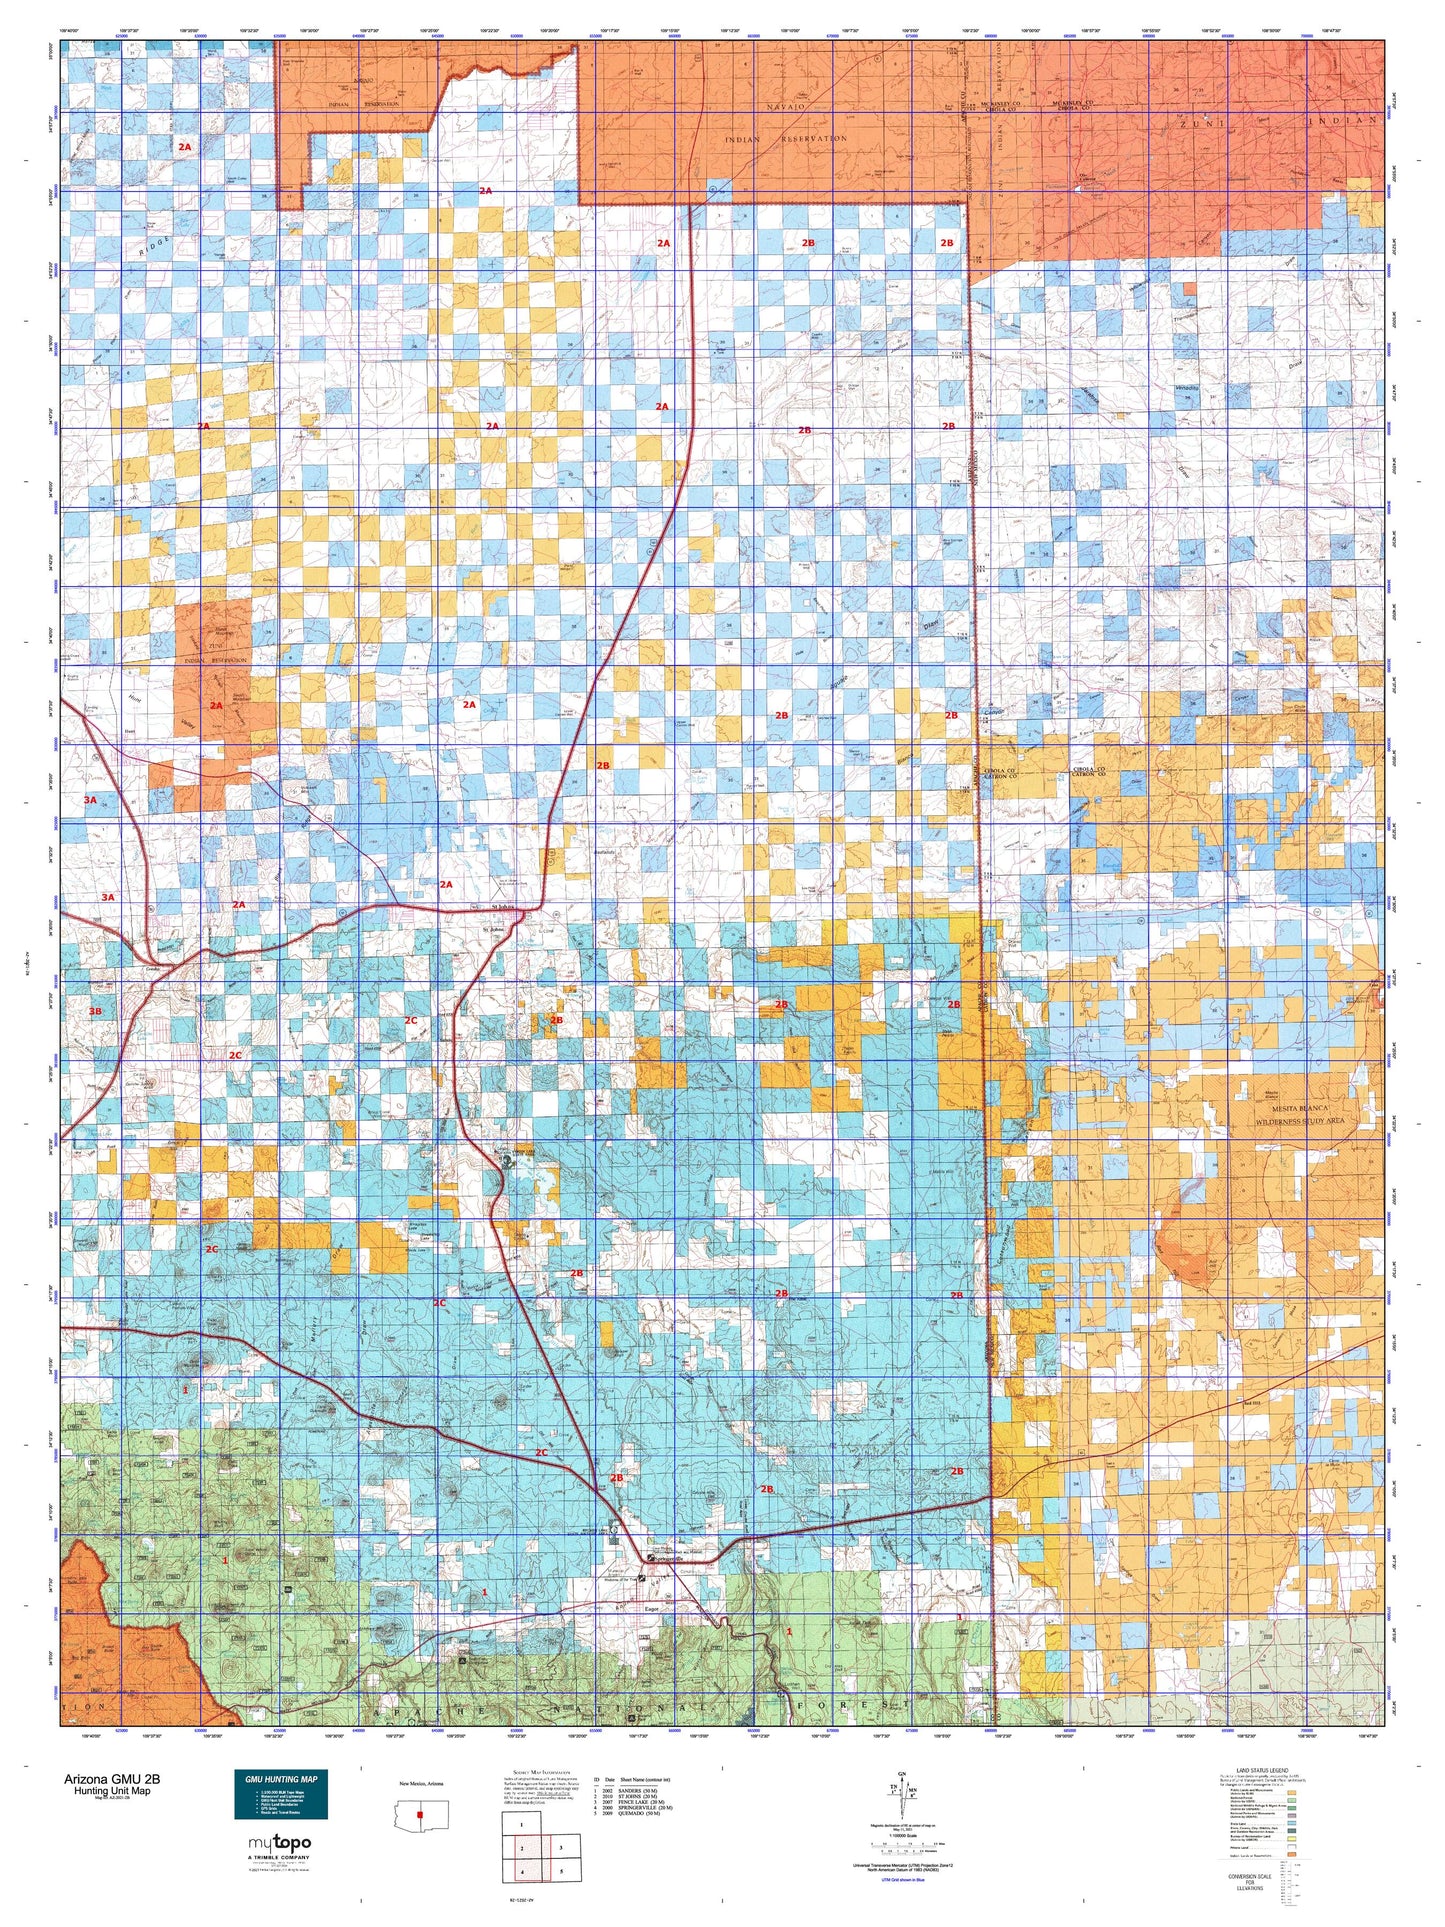 Arizona GMU 2B Map Image